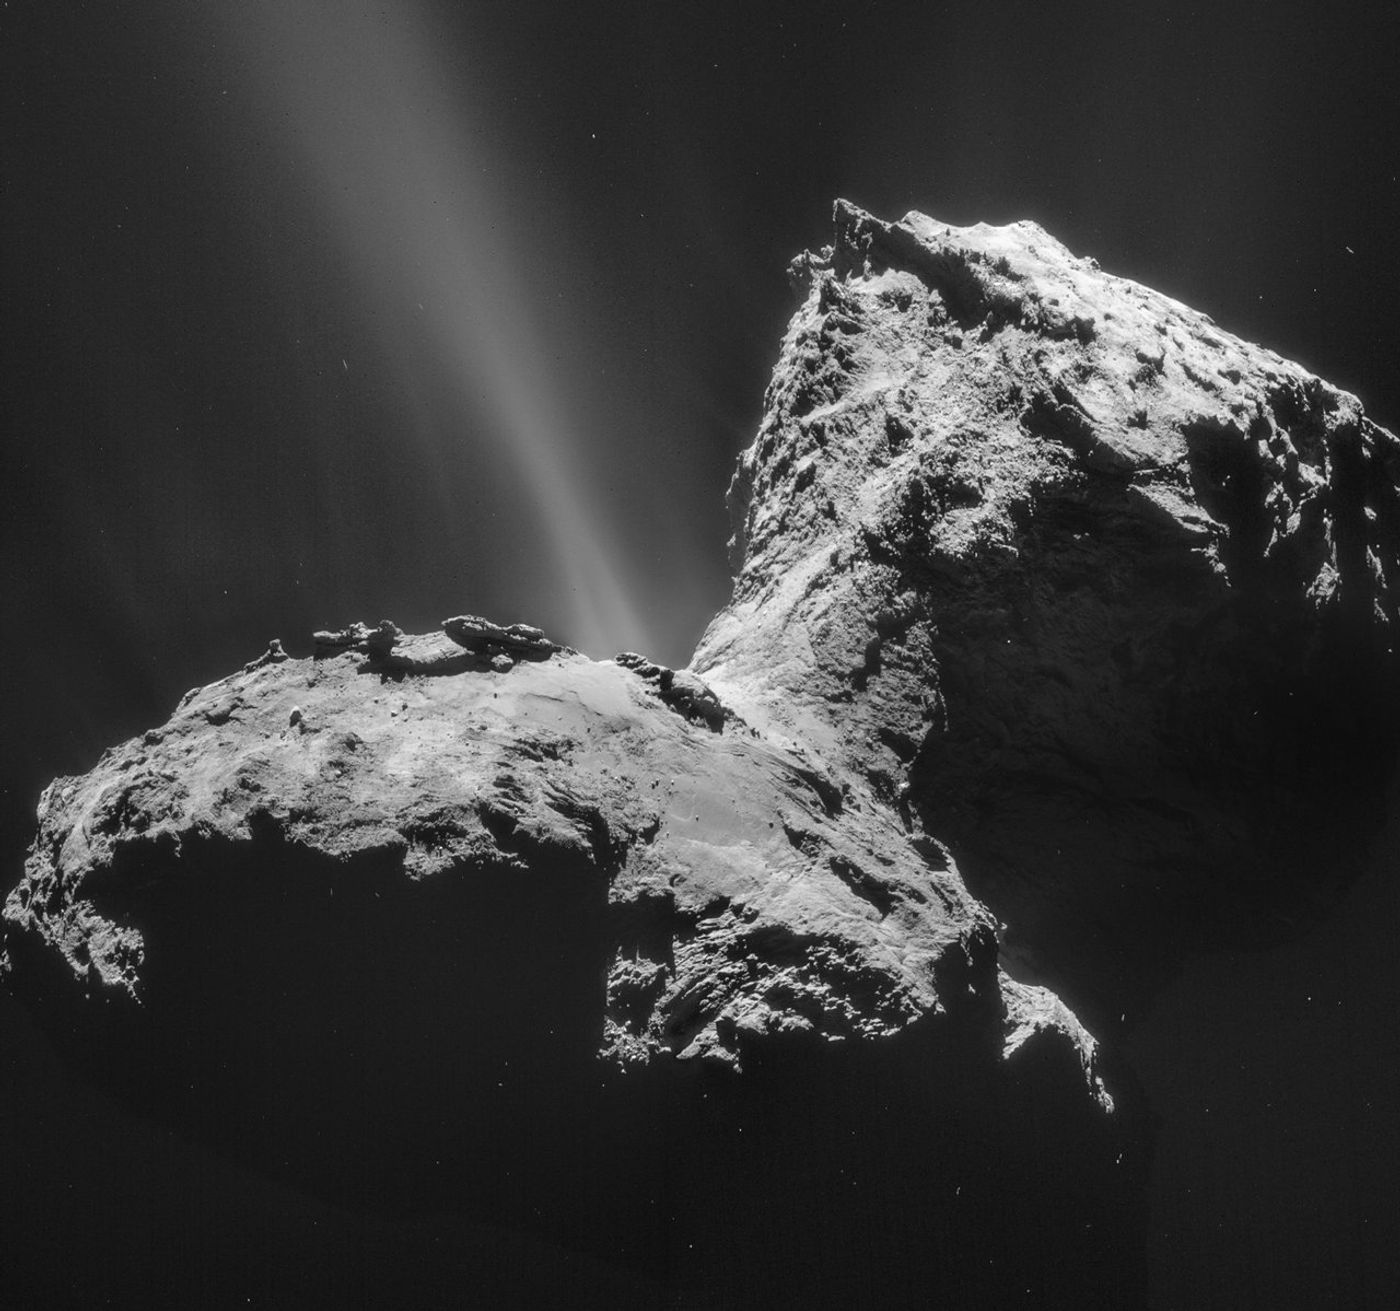  Image Credit: European Space Agency (ESA)/Rosetta/NAVCAM - CC BY-SA IGO 3.0